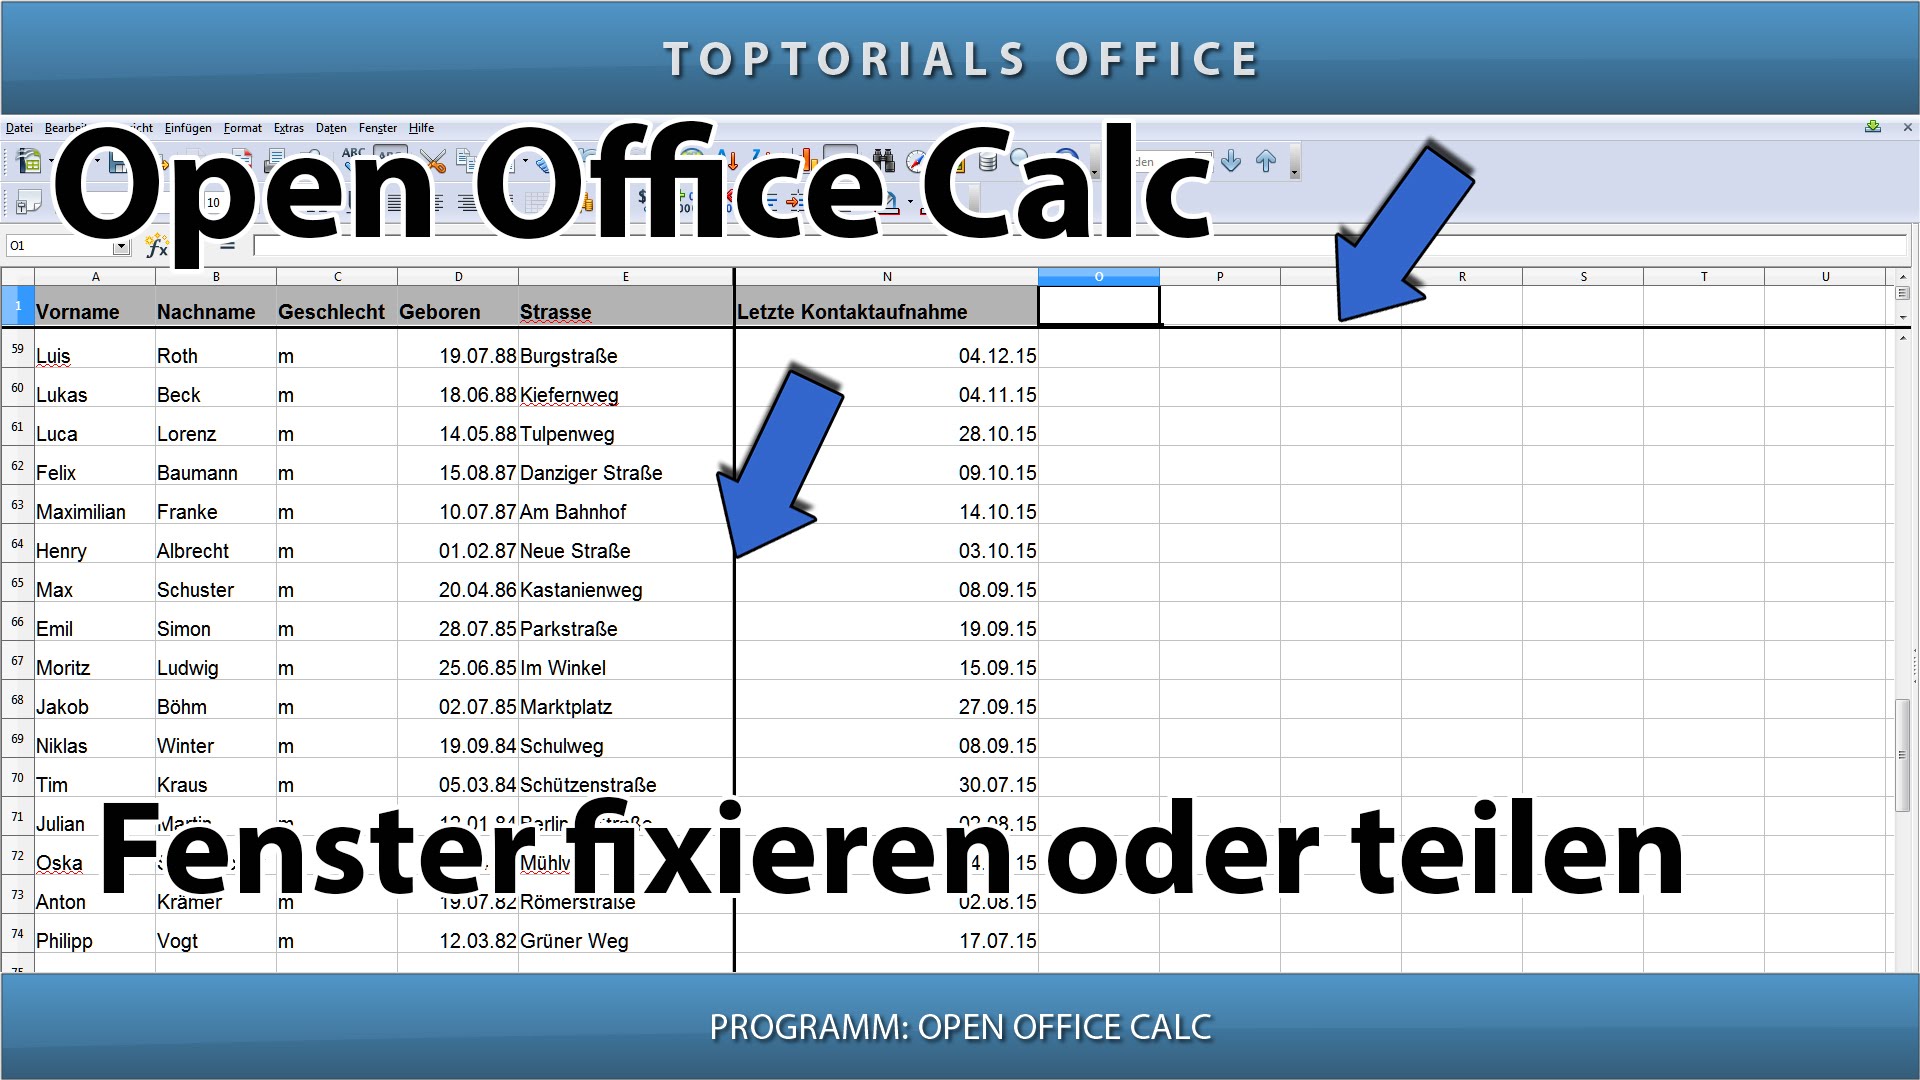 Fenster teilen oder fixieren (Open Office Calc) - TOPTORIALS1920 x 1080